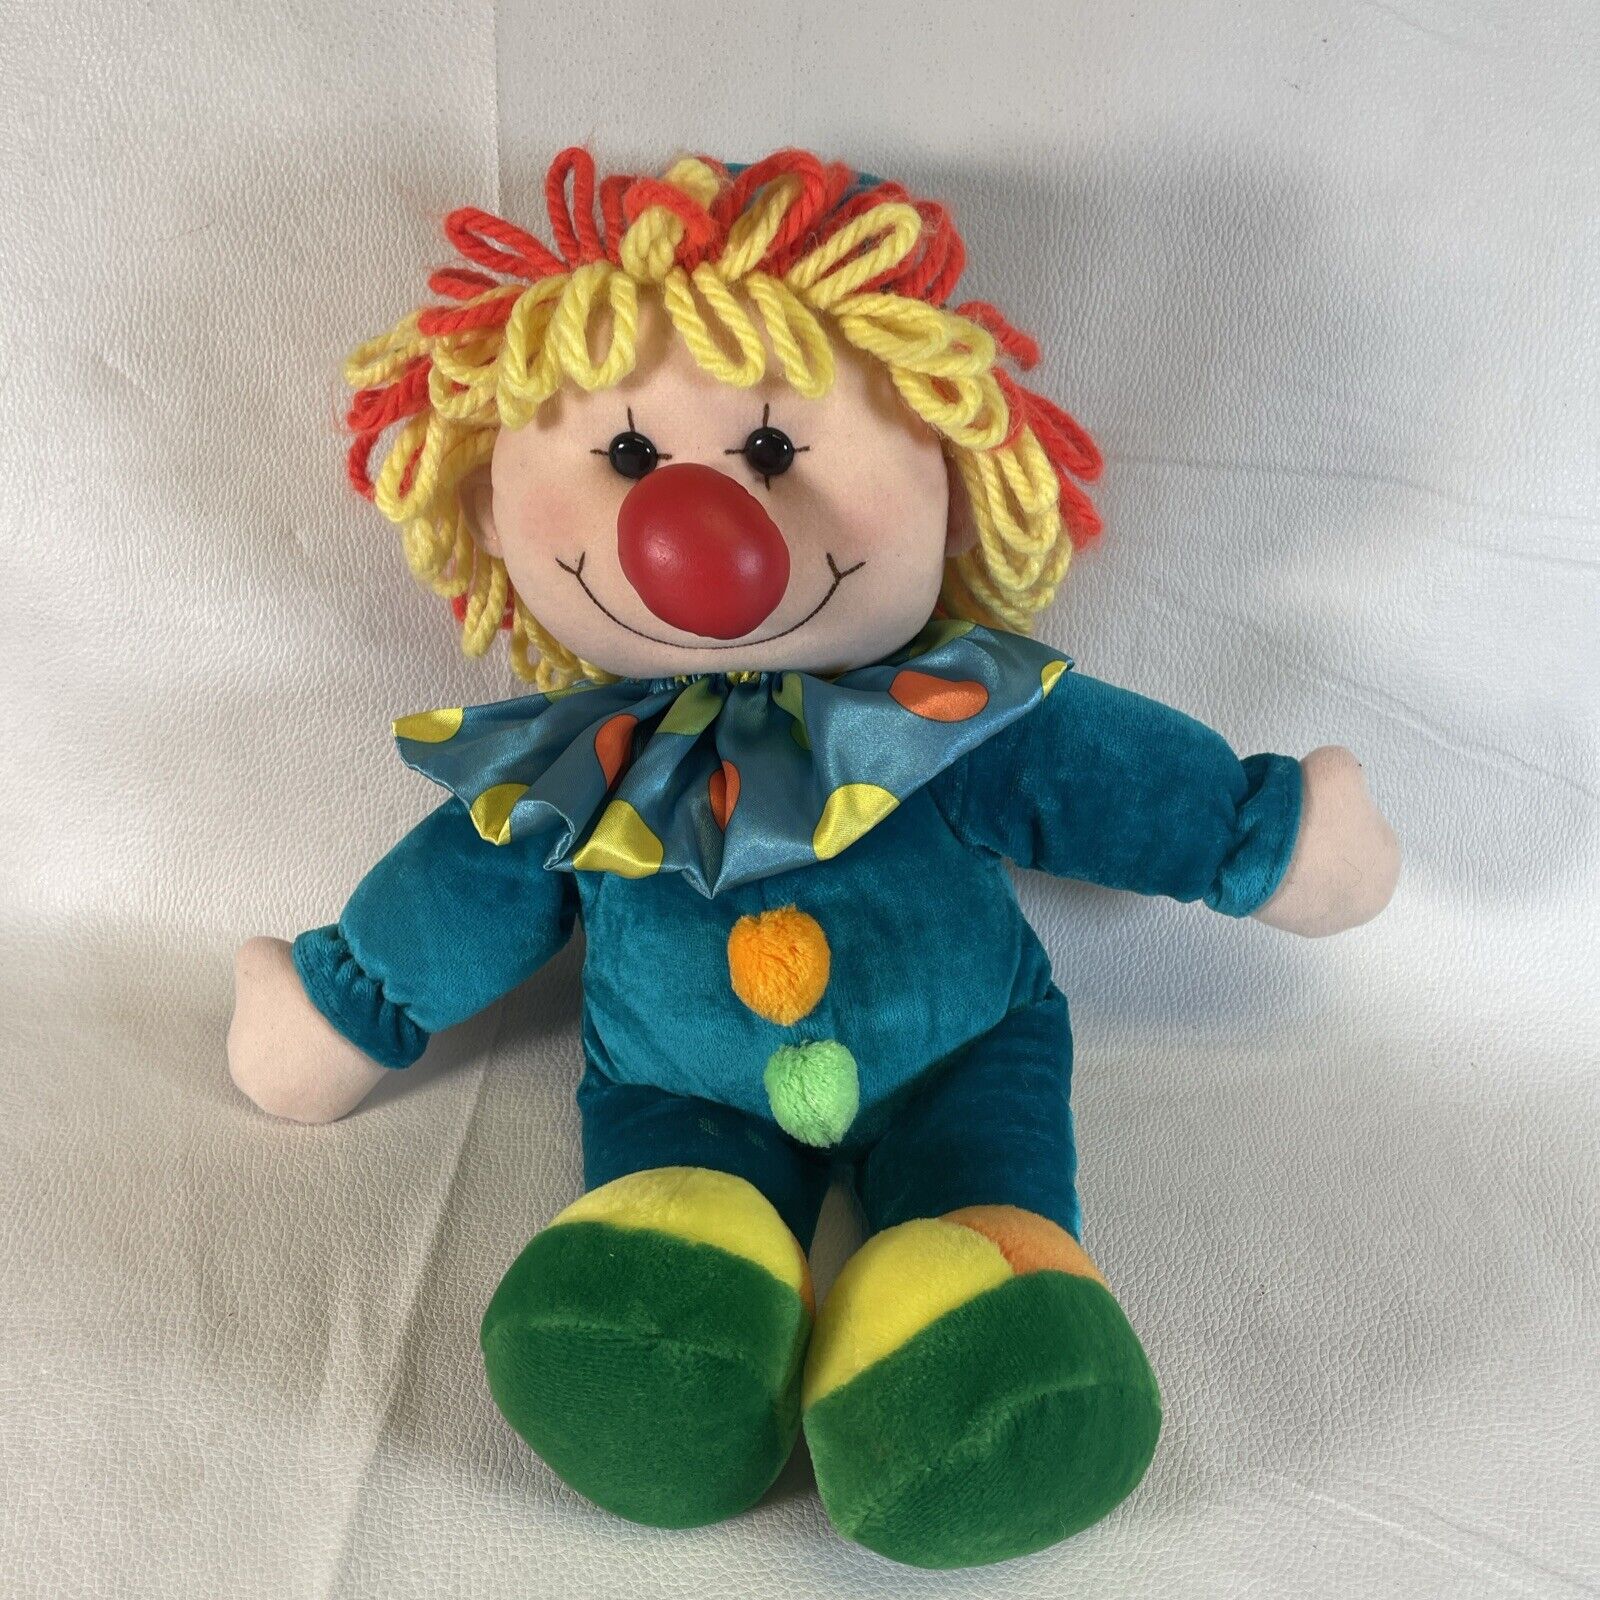 Vintage Jesty the Clown Squeaky Stuffed Plush Commonwealth 1990 Doll Yarn Hair